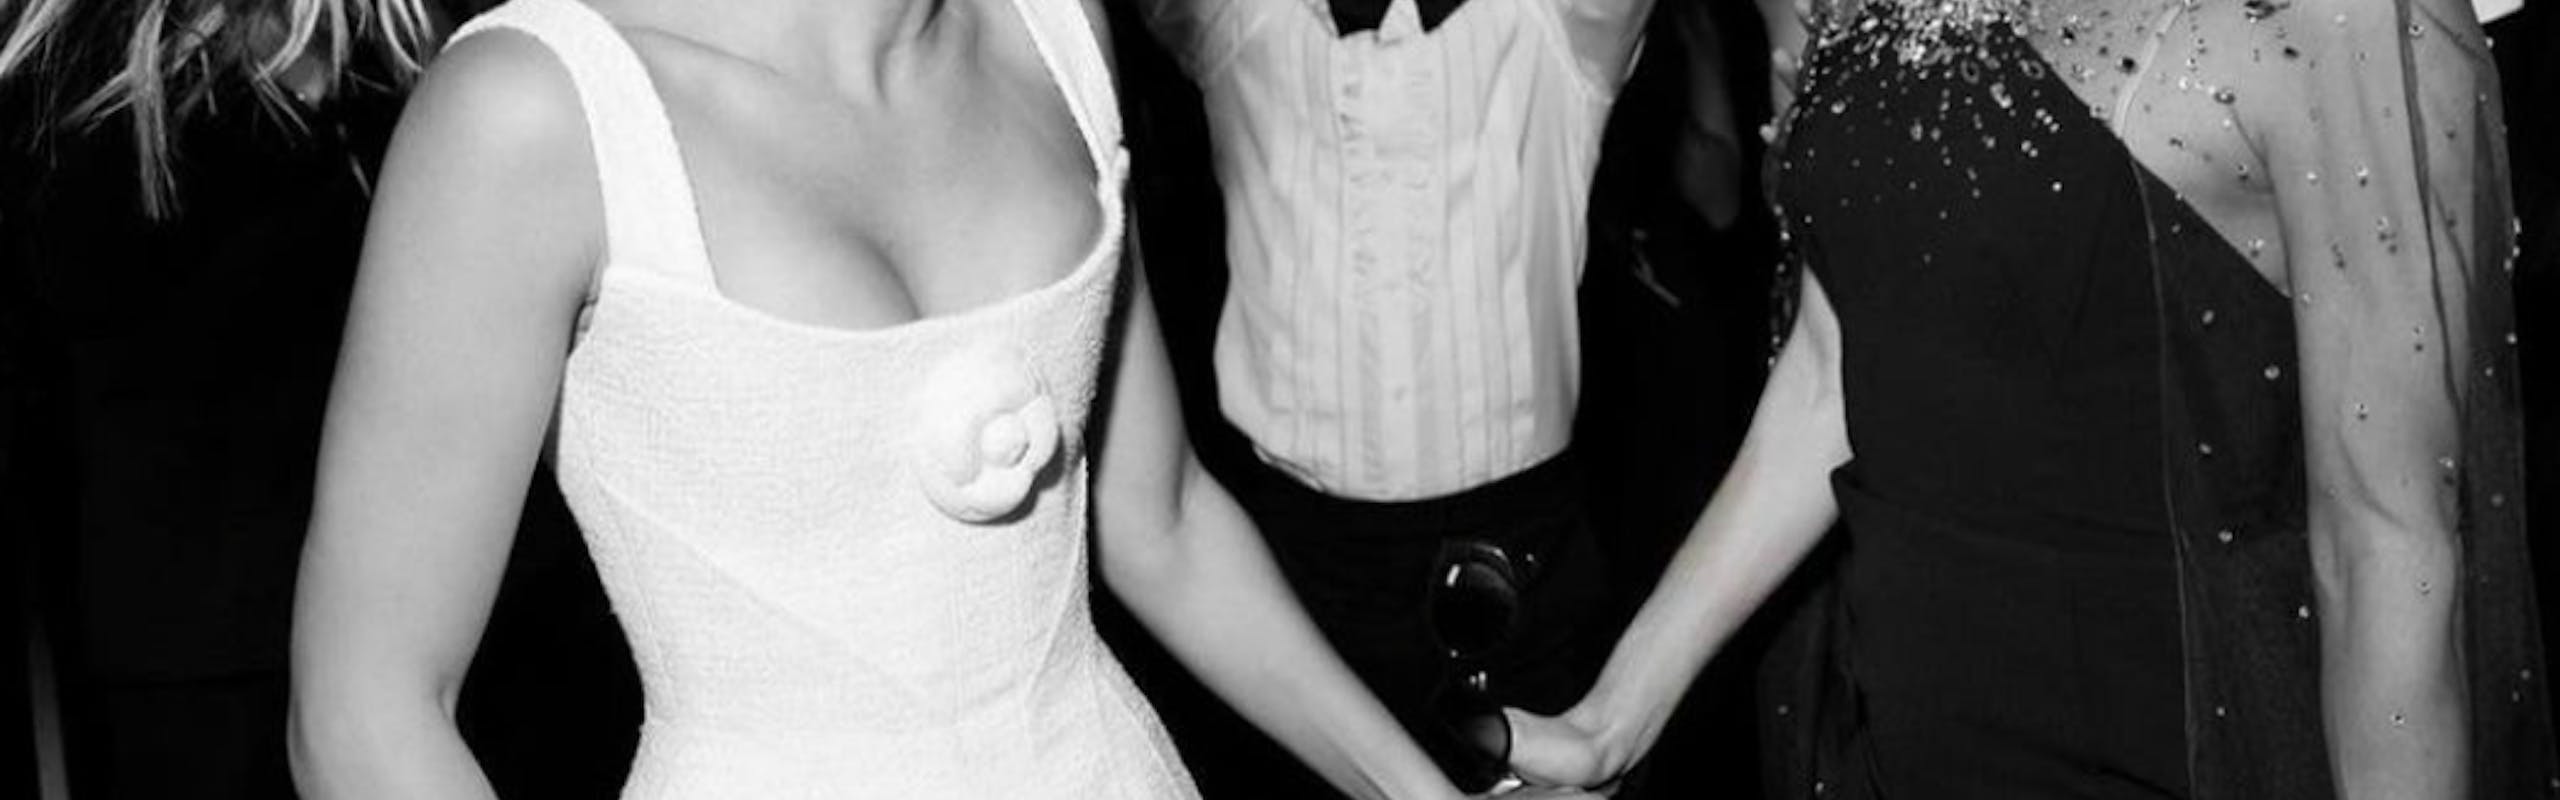 Bridesmaid proposal box. Sofia Richie at her wedding with her friend, Paris Hilton.